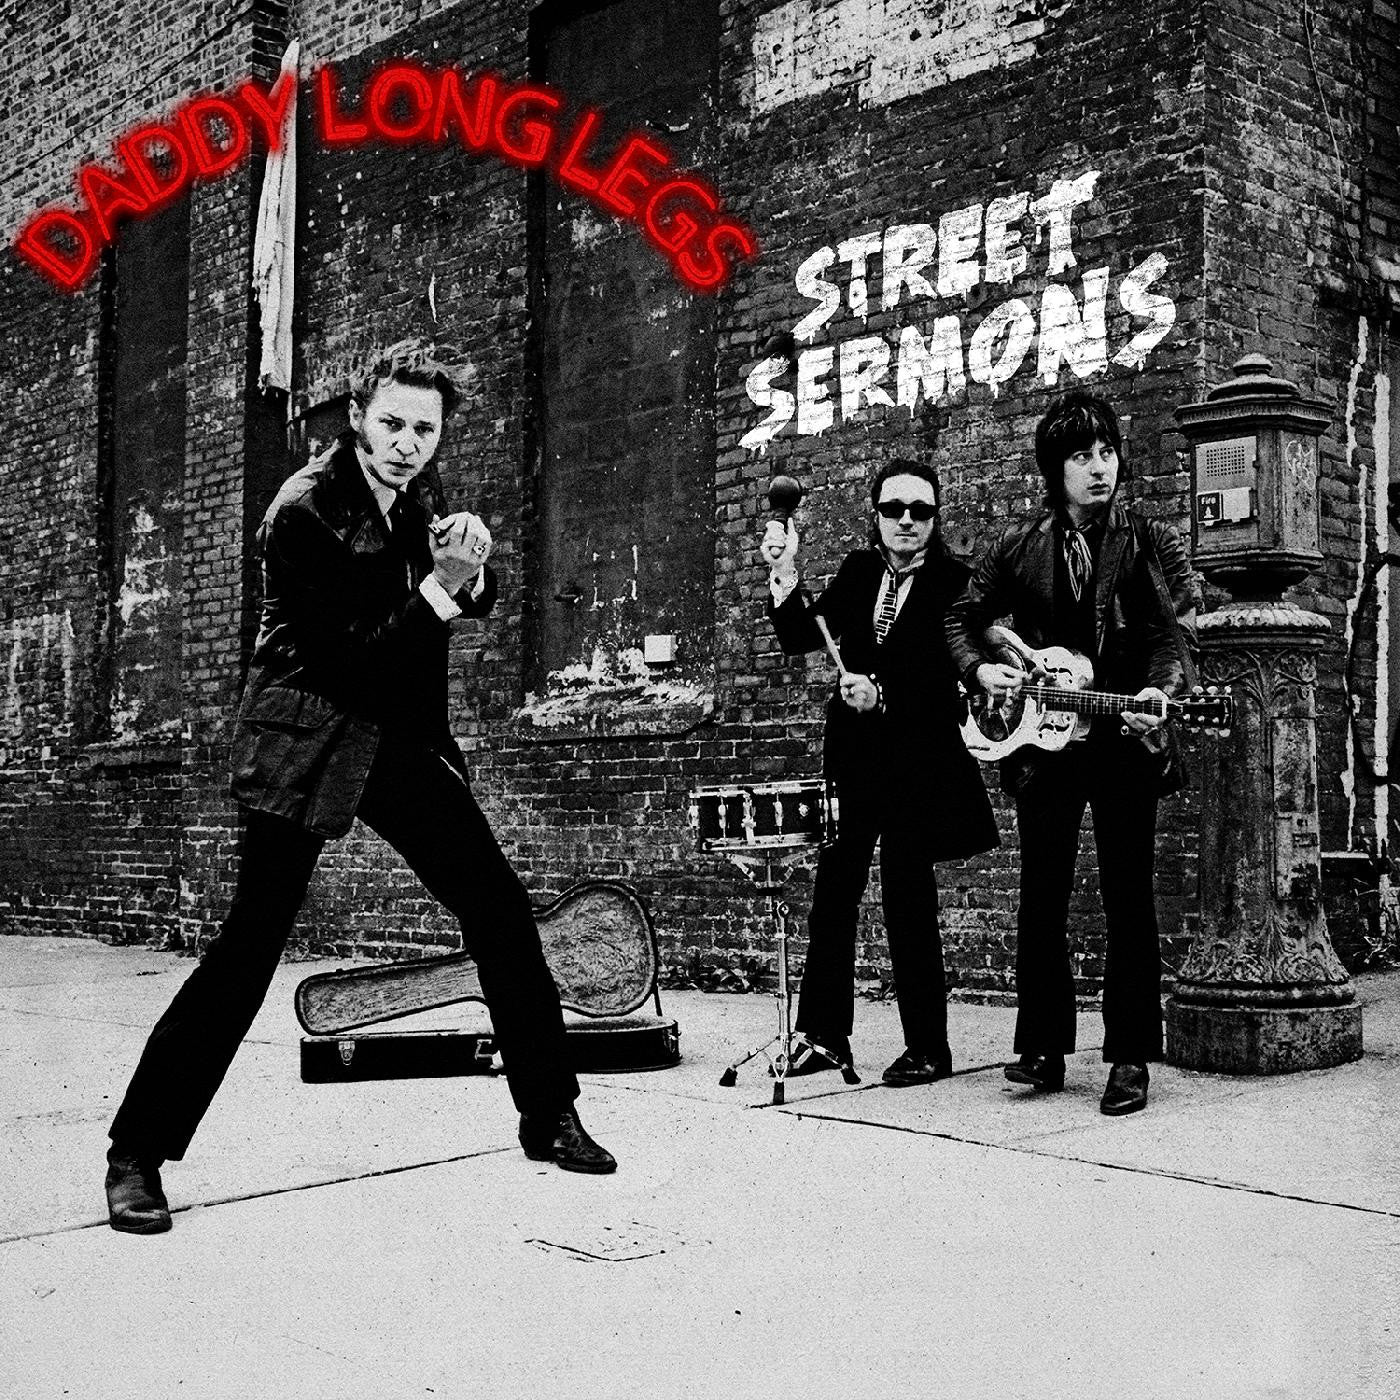 Daddy Long Legs - Street Sermons (Red Vinyl)